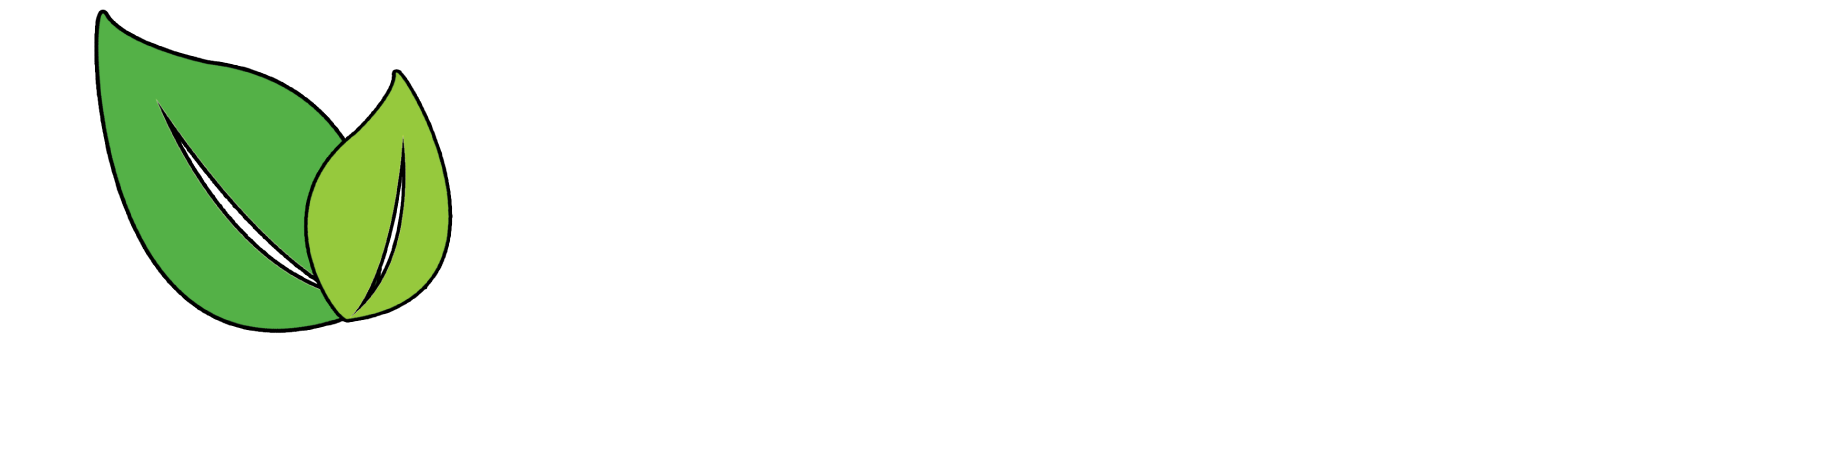 nz juice logo